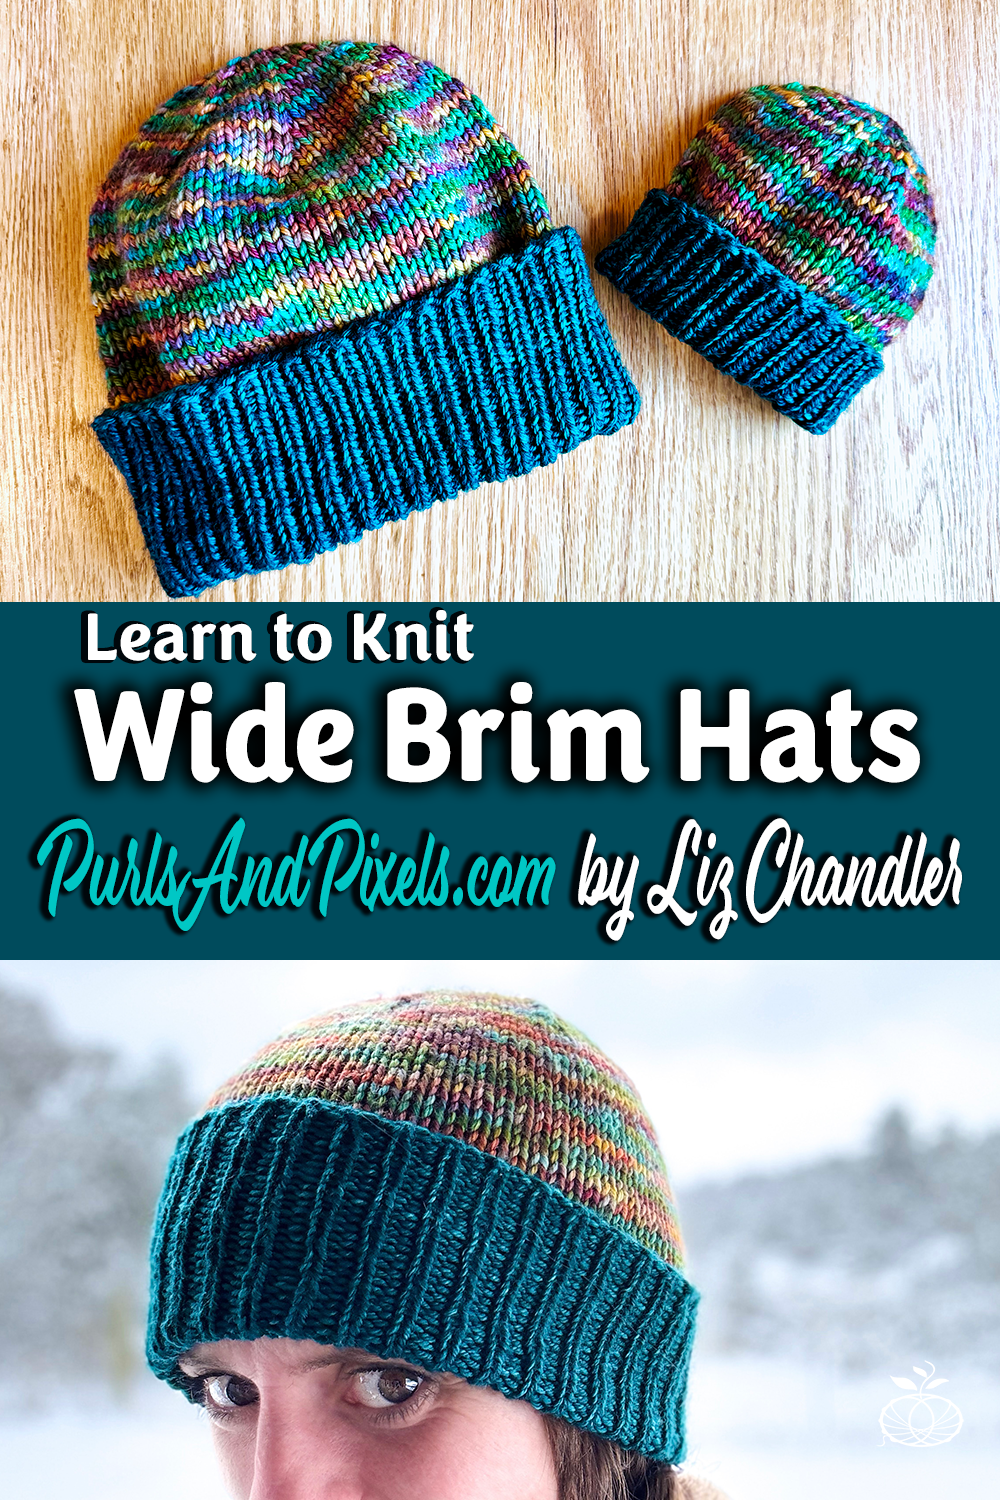 Wide Brim Hat knitting pattern with Malabrigo Rios Yarn by Liz Chandler @PurlsAndPixels.